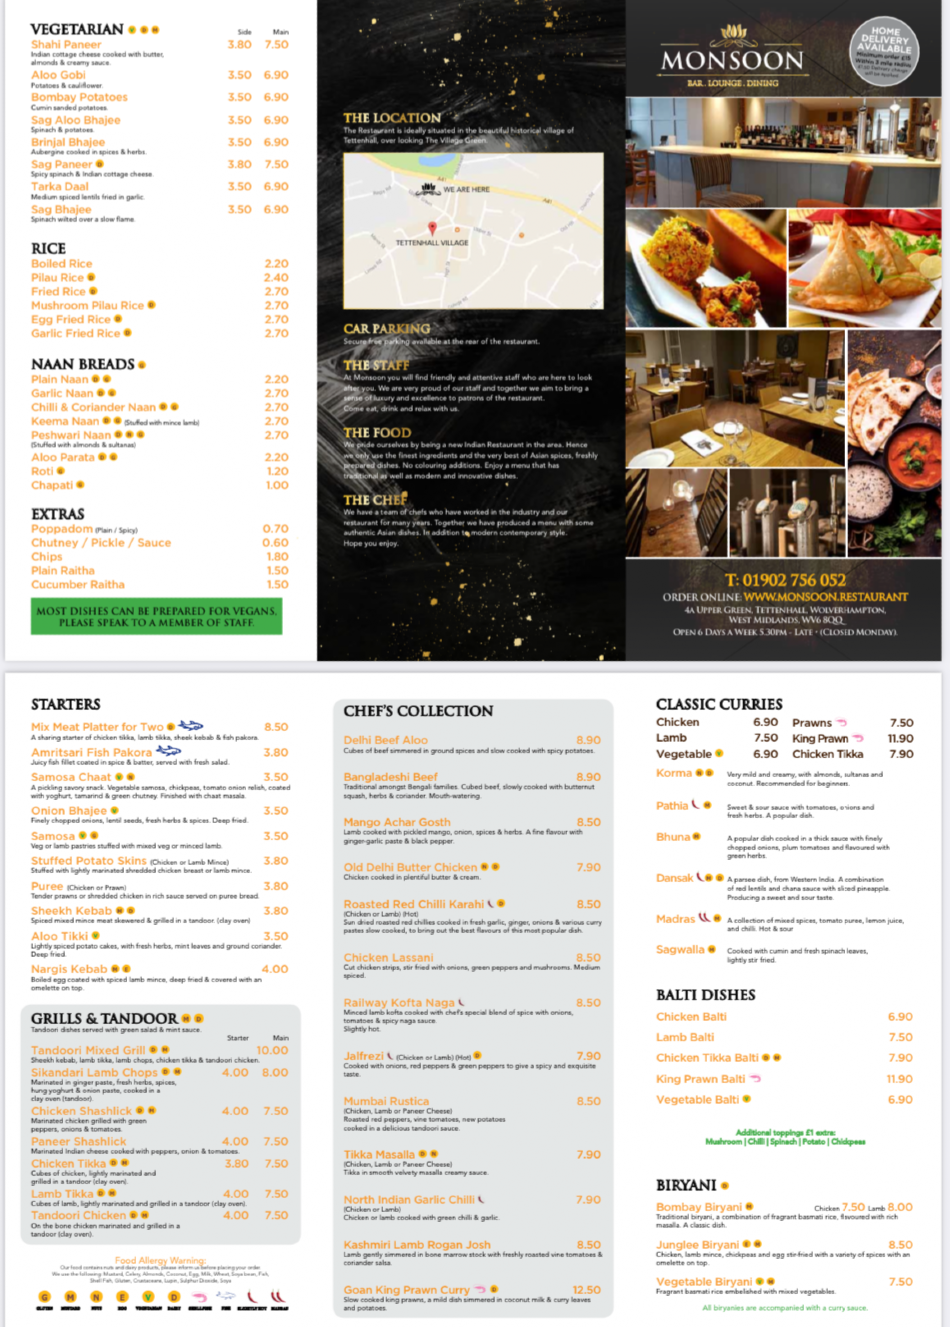 Takeaway Restaurant Menu Page - Monsoon - Wolverhampton